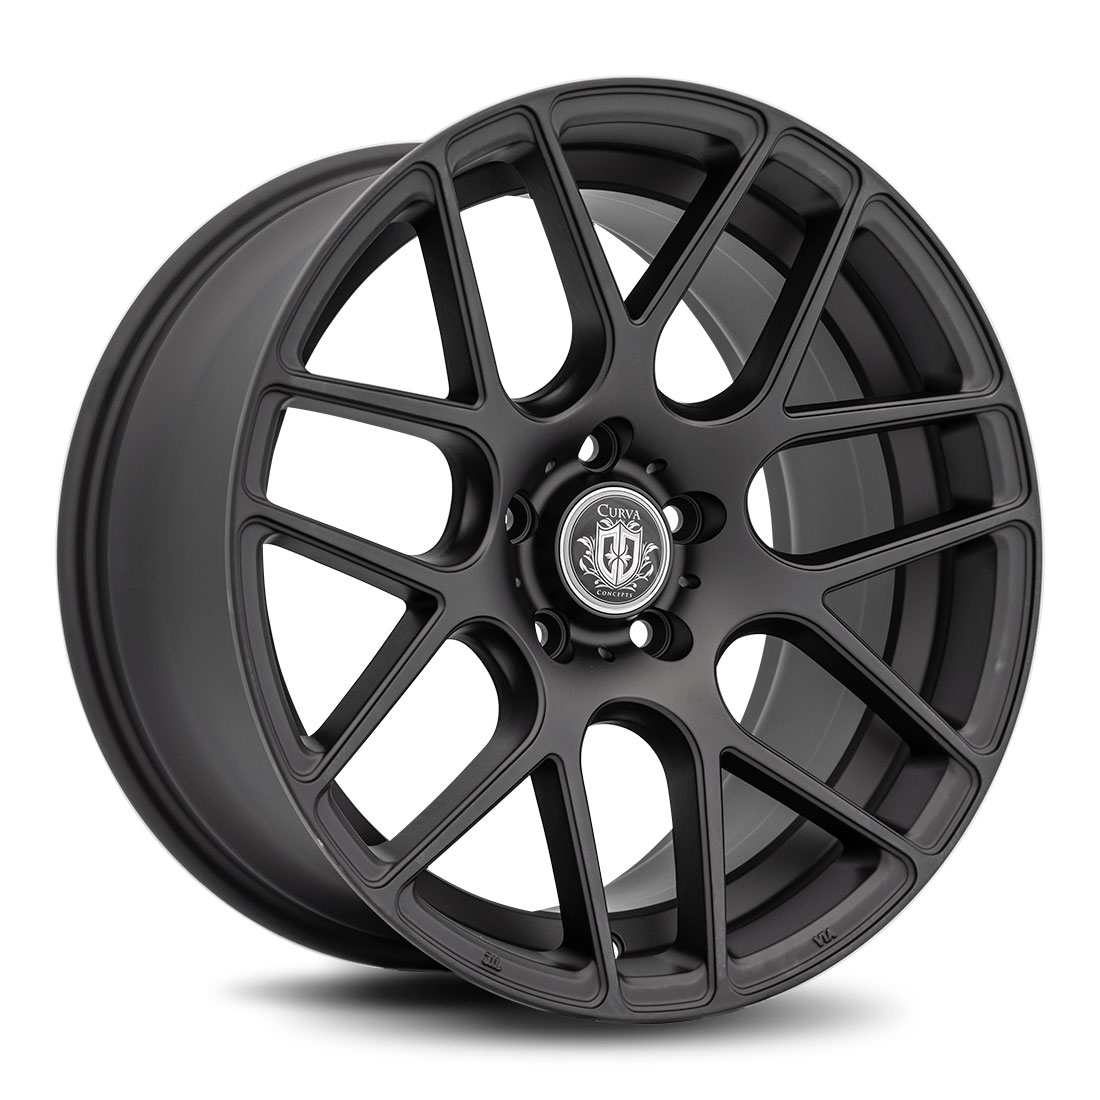 Curva Concepts C7 Aftermarket Wheels 18 Inch Matte Black